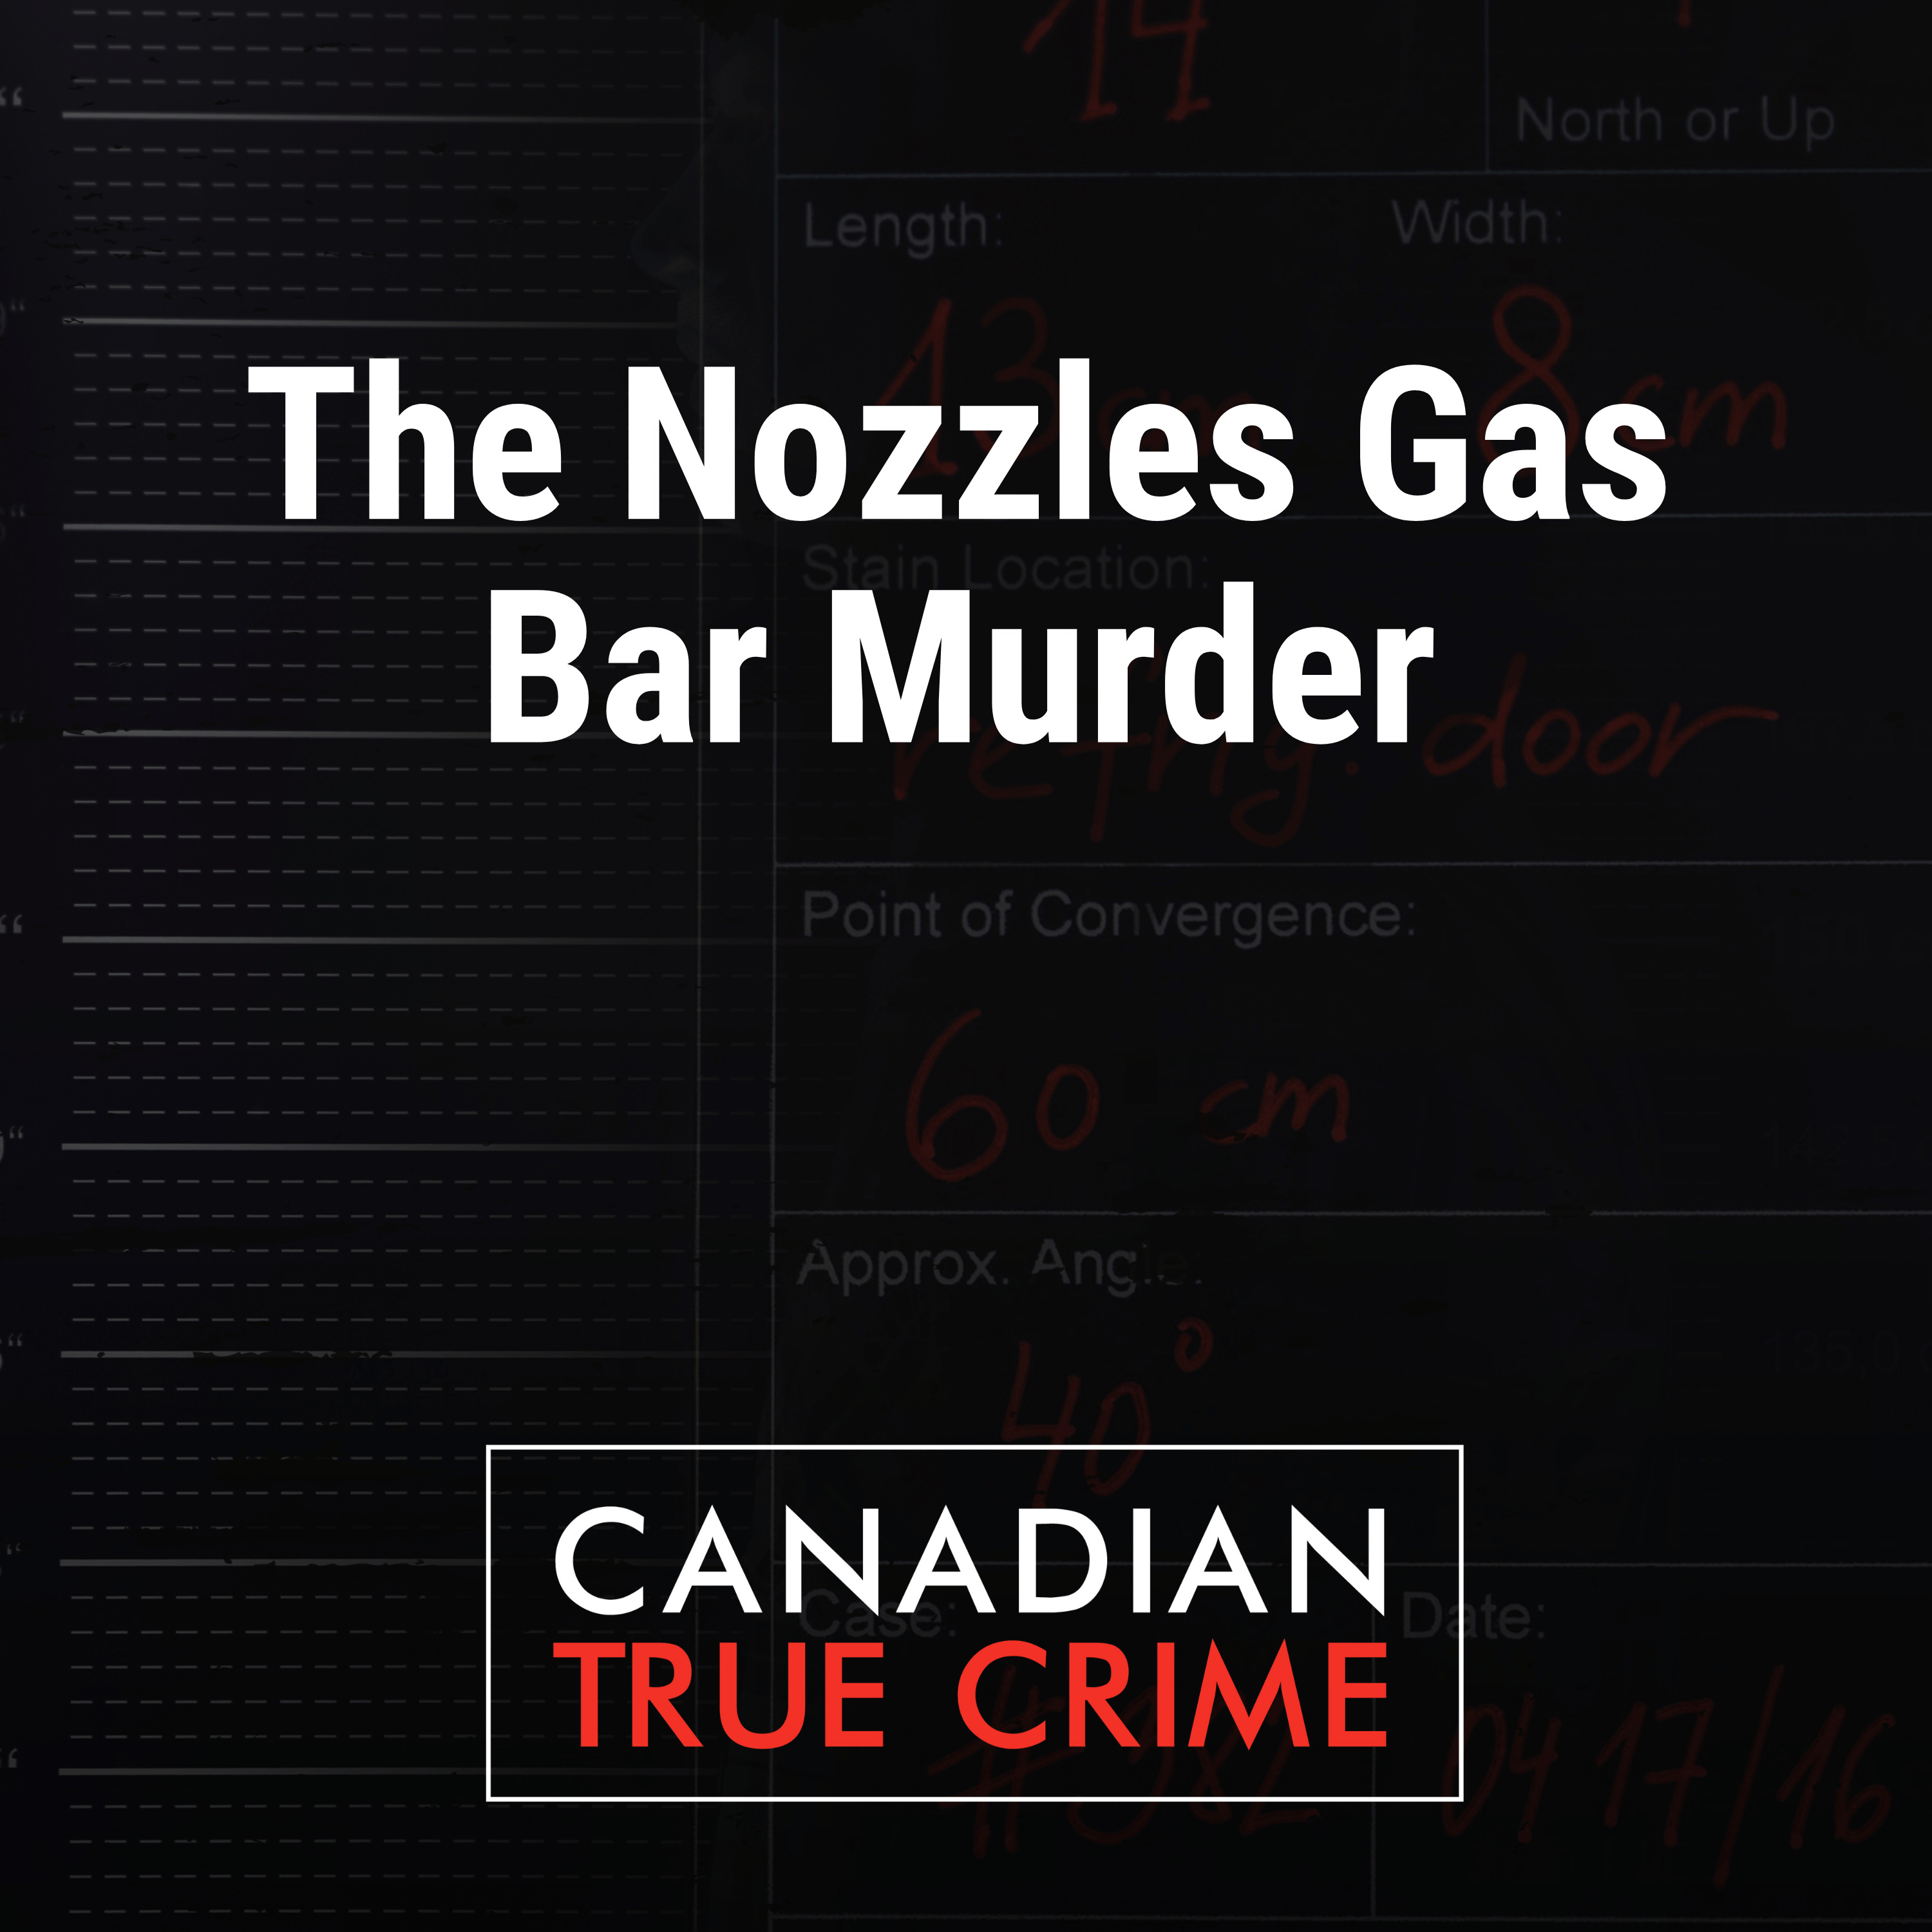 The ”Nozzles Gas Bar Murder”